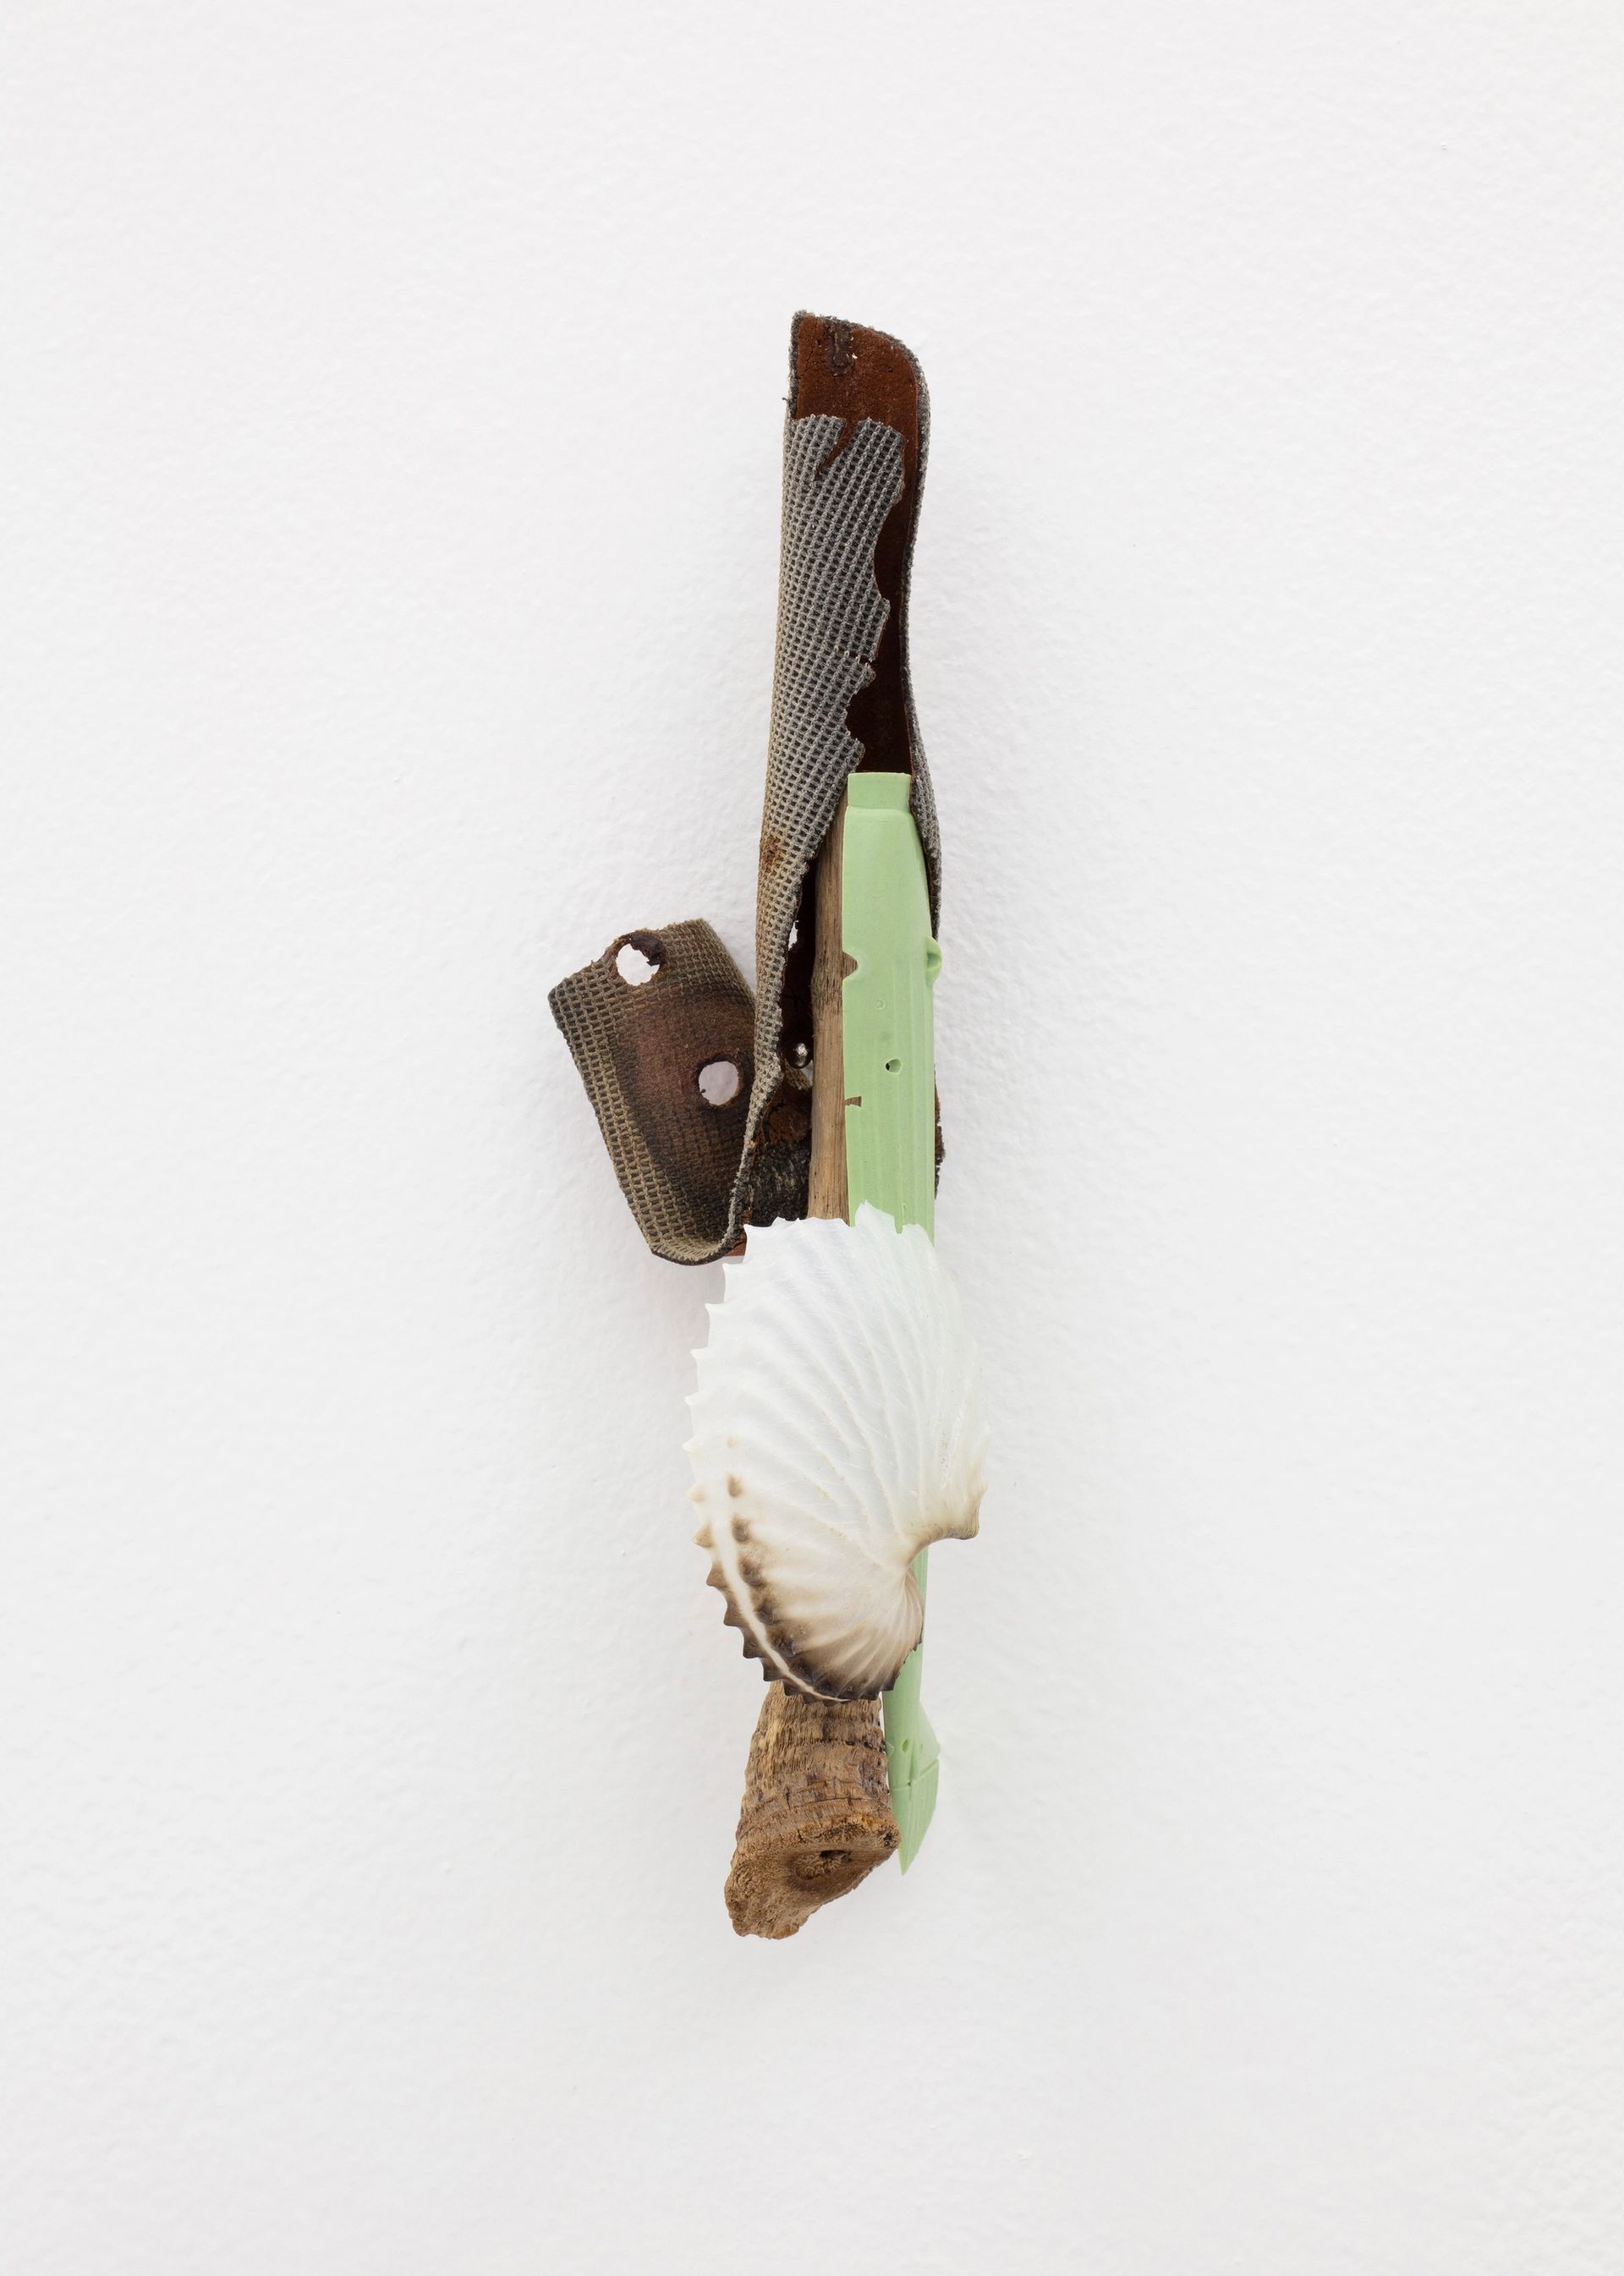 Invitation card / David Fesl, Untitled, 2021, textile belt, giant reed rhizome, airplane plastic model, paper nautilus shell, 5.3 × 16.6 × 5.7 cm, photo: Ramiro Chaves